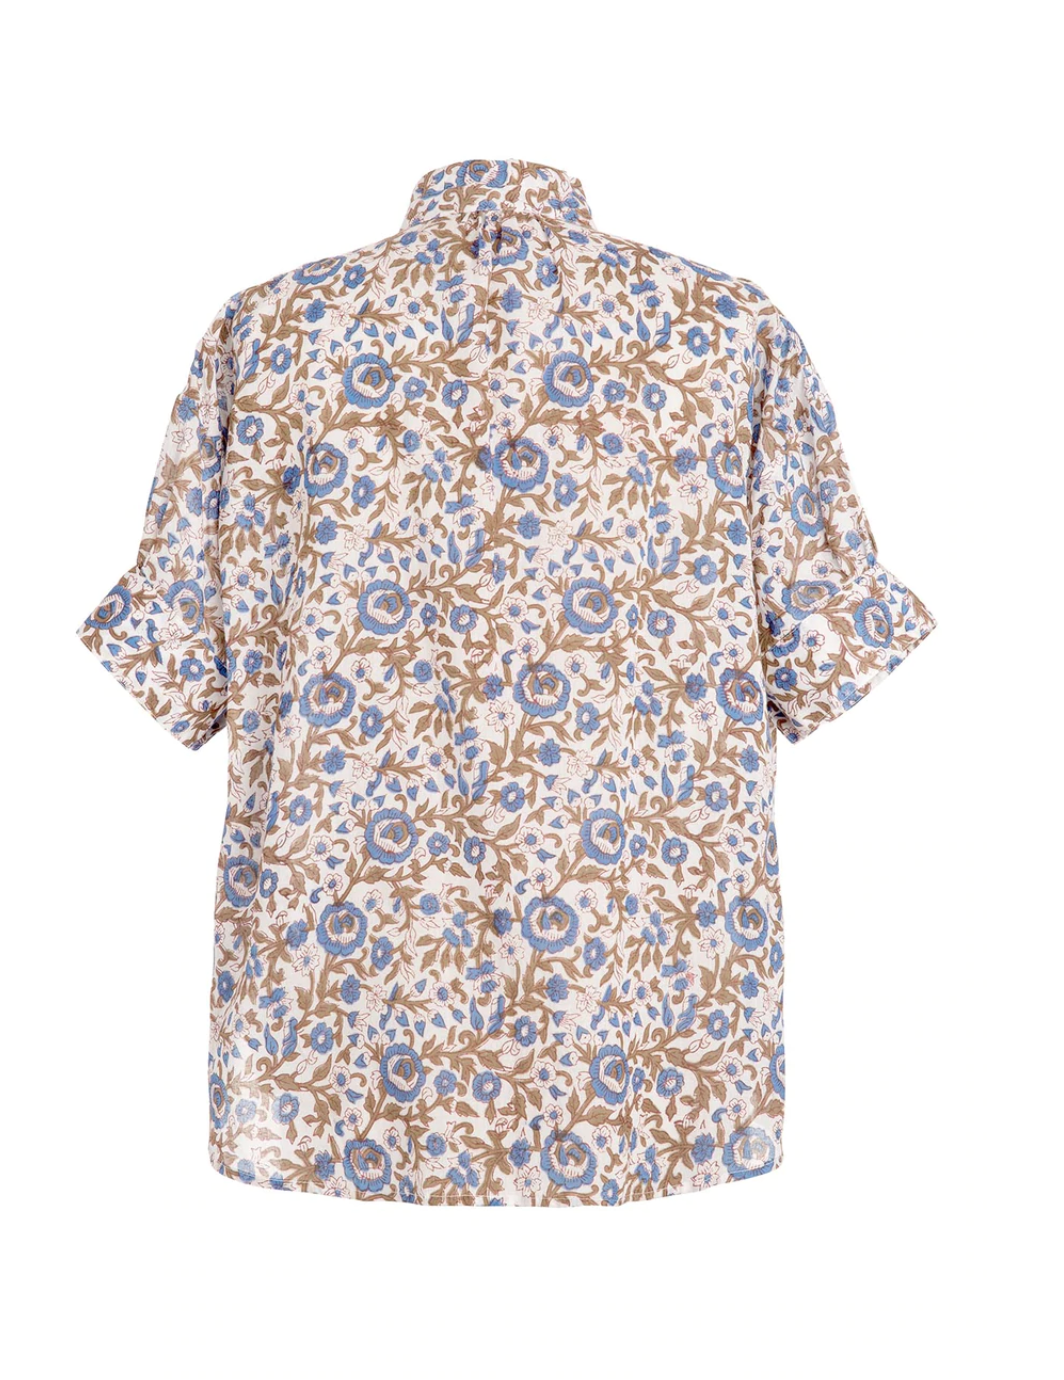 Kitsey Shirt, Hydrangea